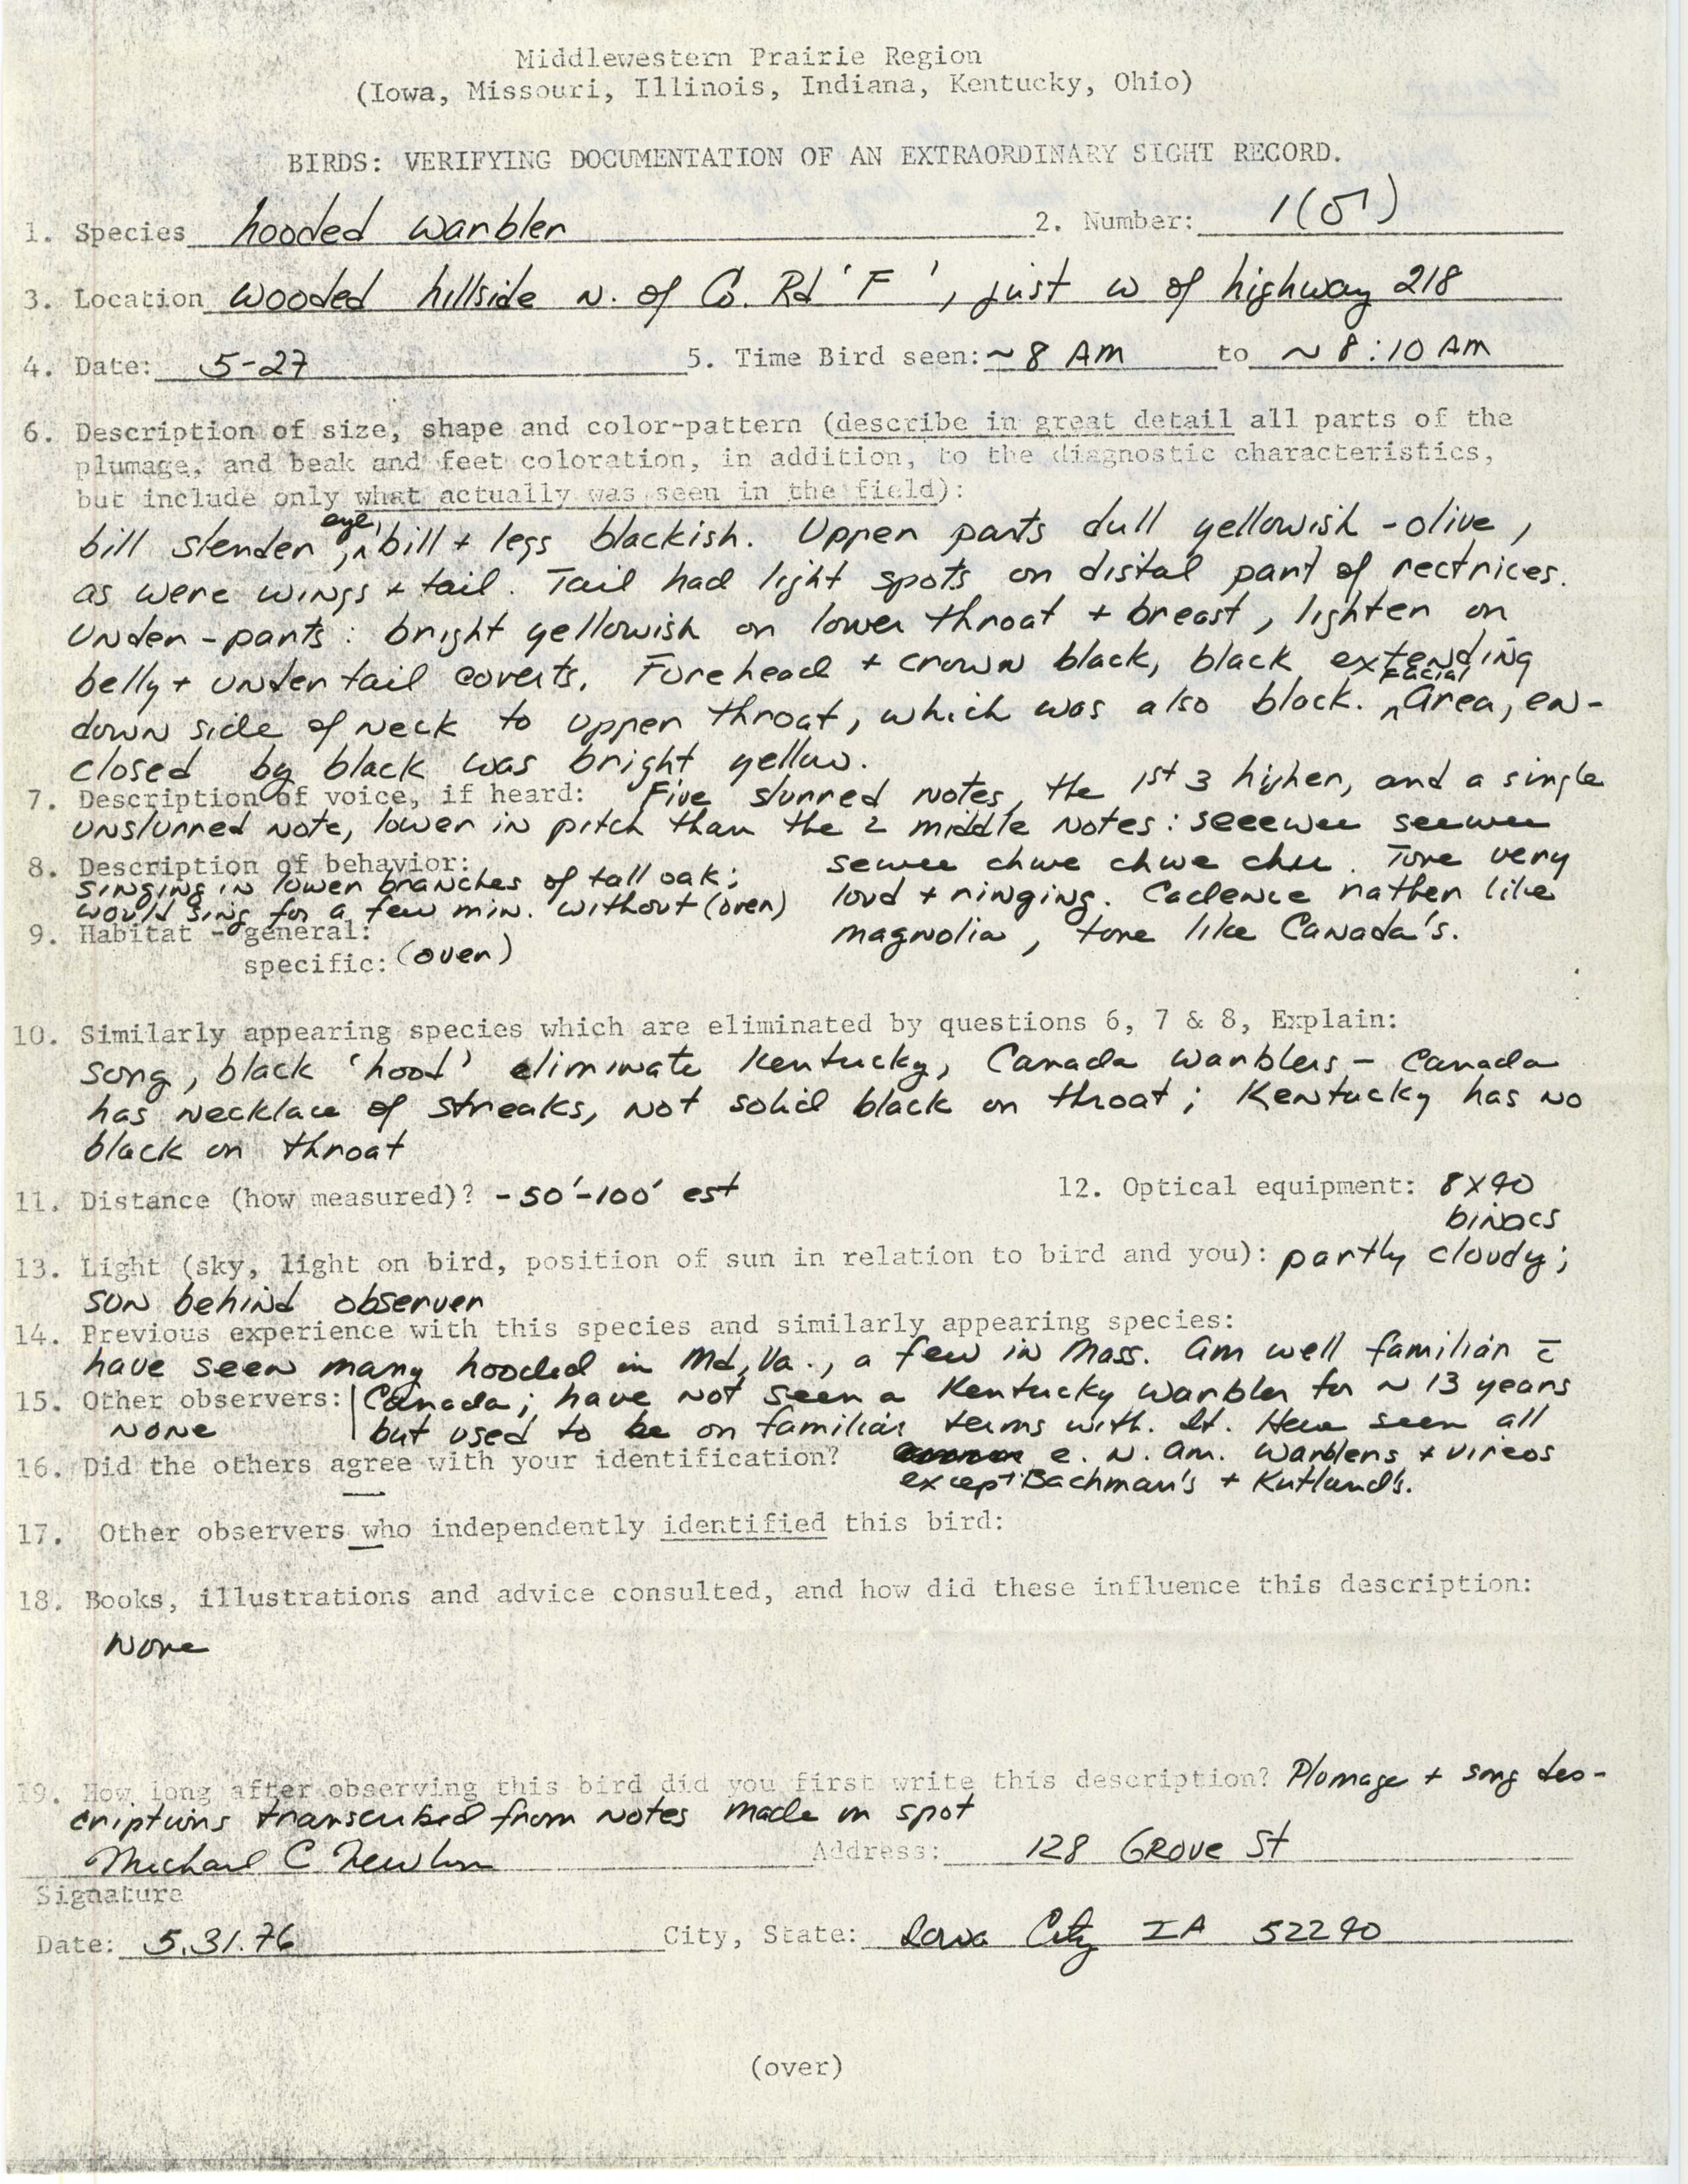 Rare bird documentation form for Hooded Warbler near Coralville Reservoir, 1976